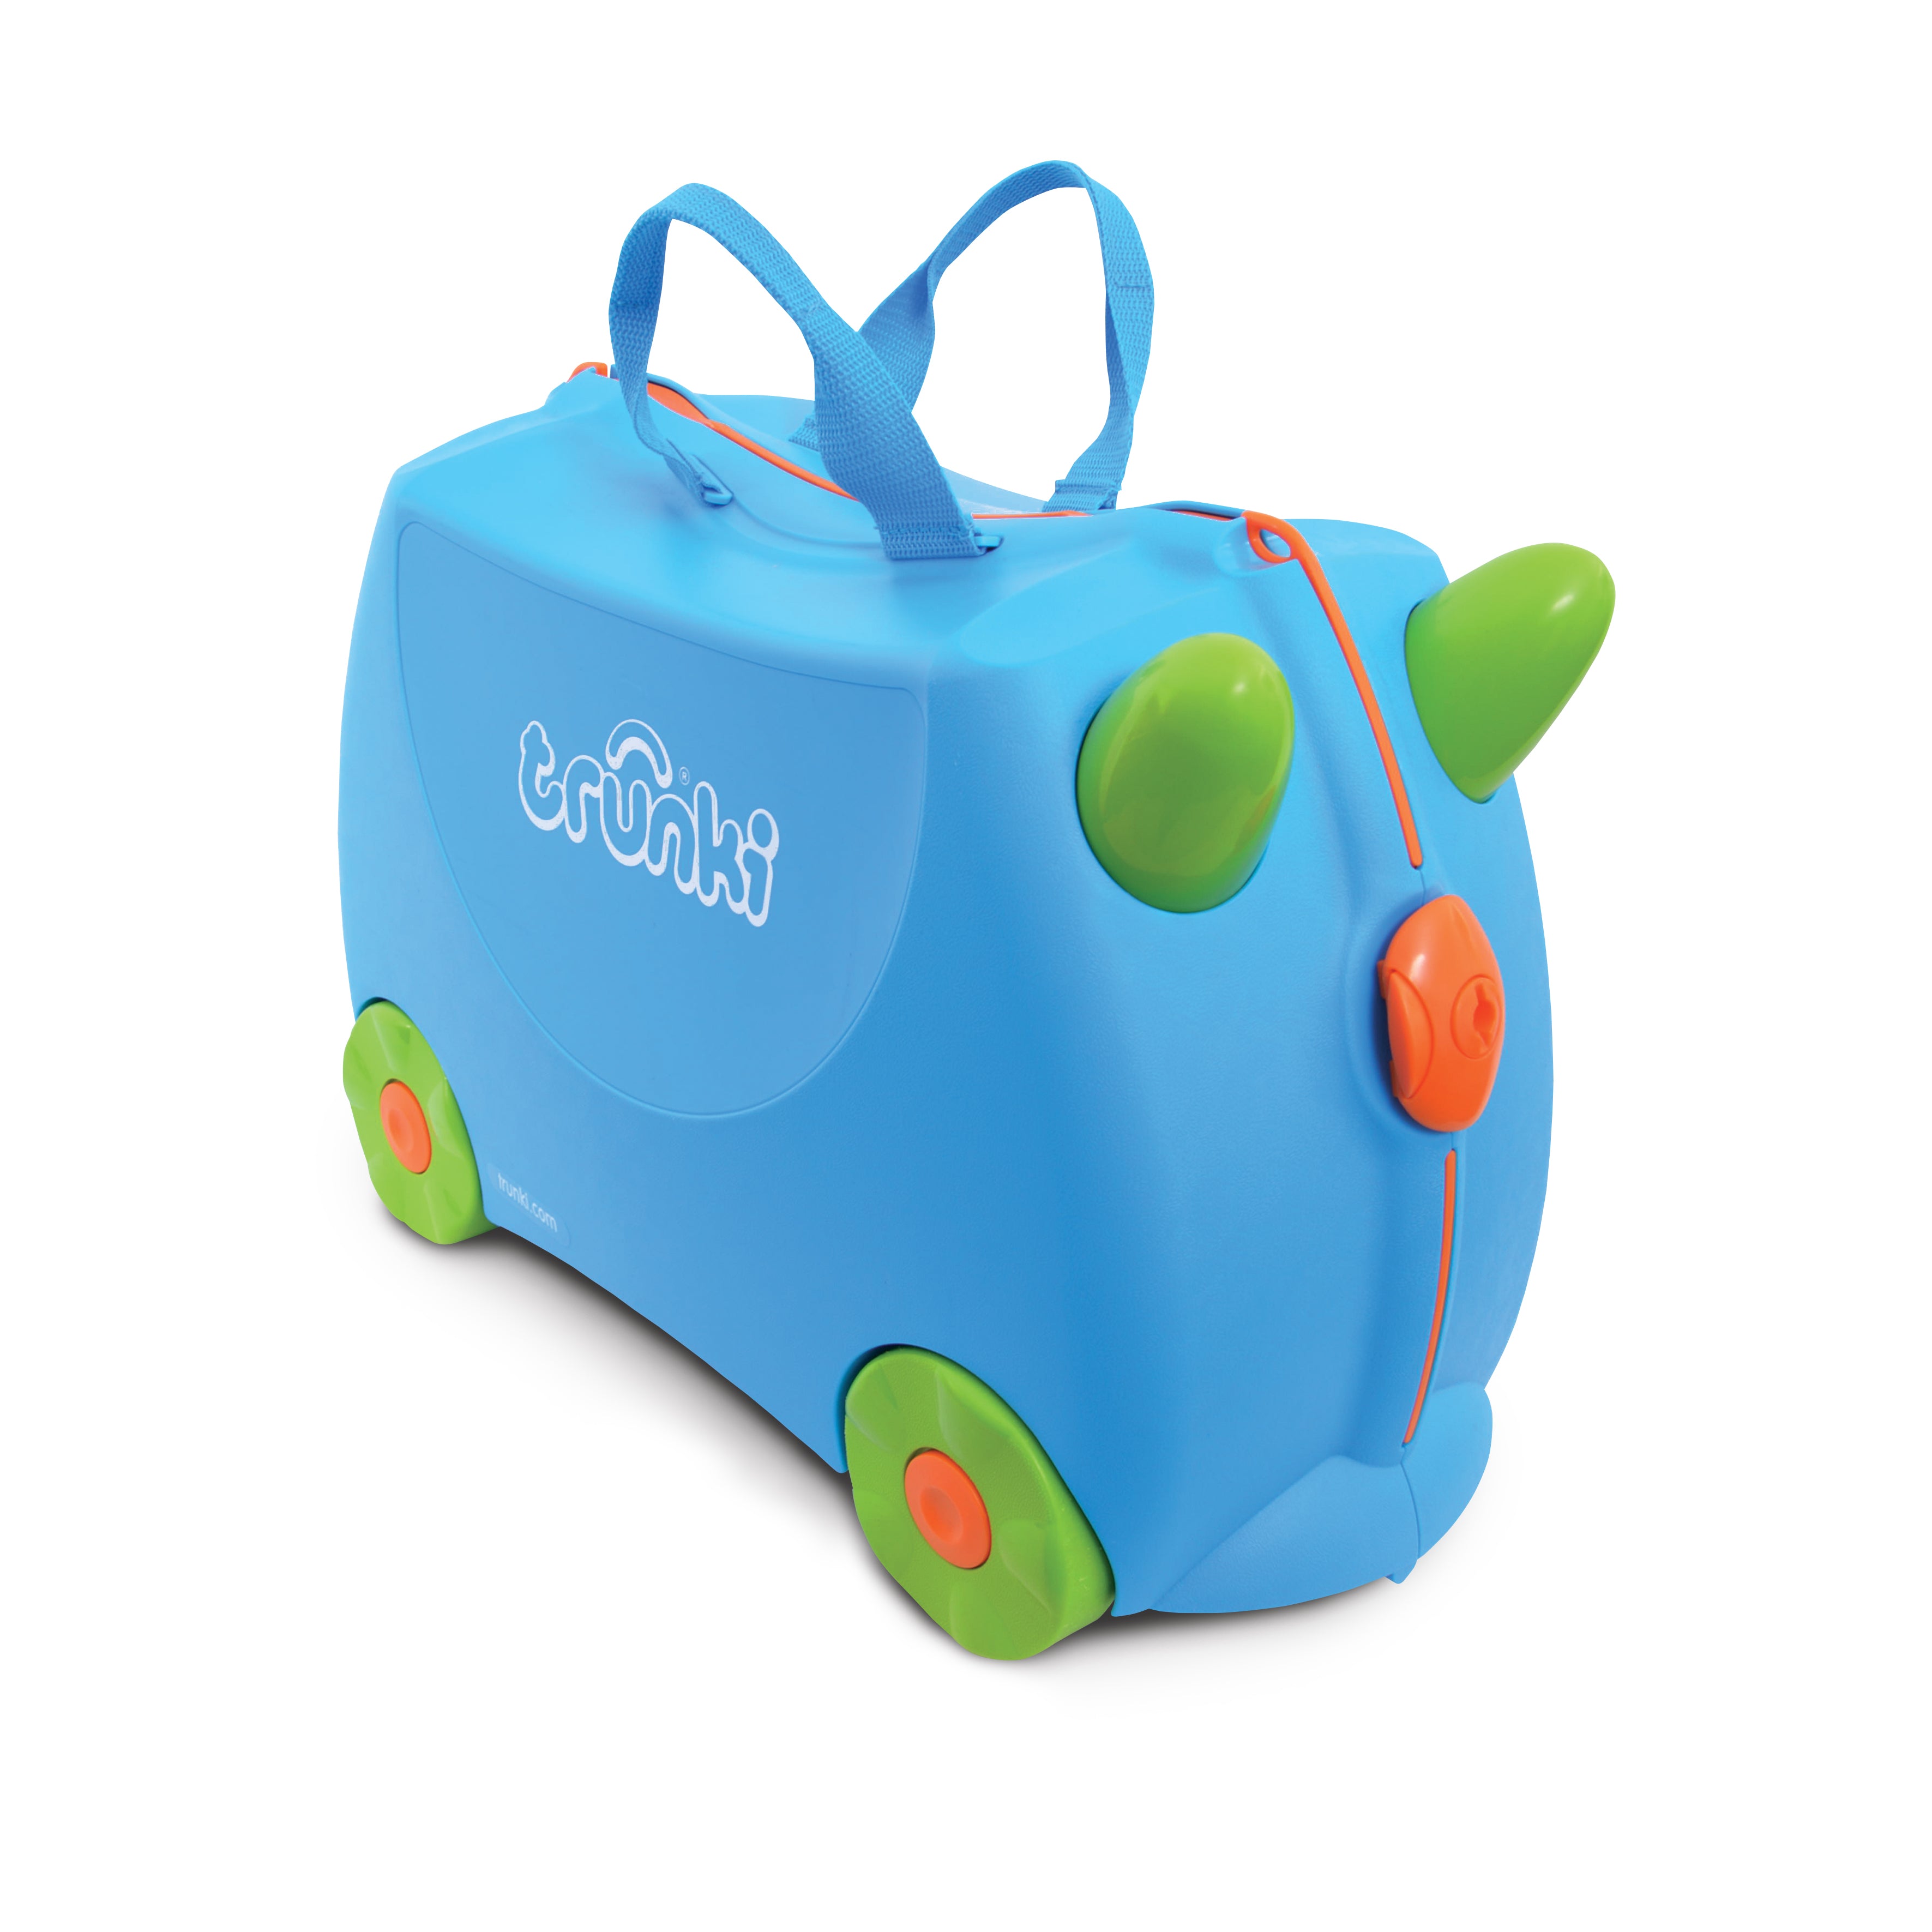 Trunki - Terrance, Children’s Ride-On Suitcase & Kid's Hand Luggage